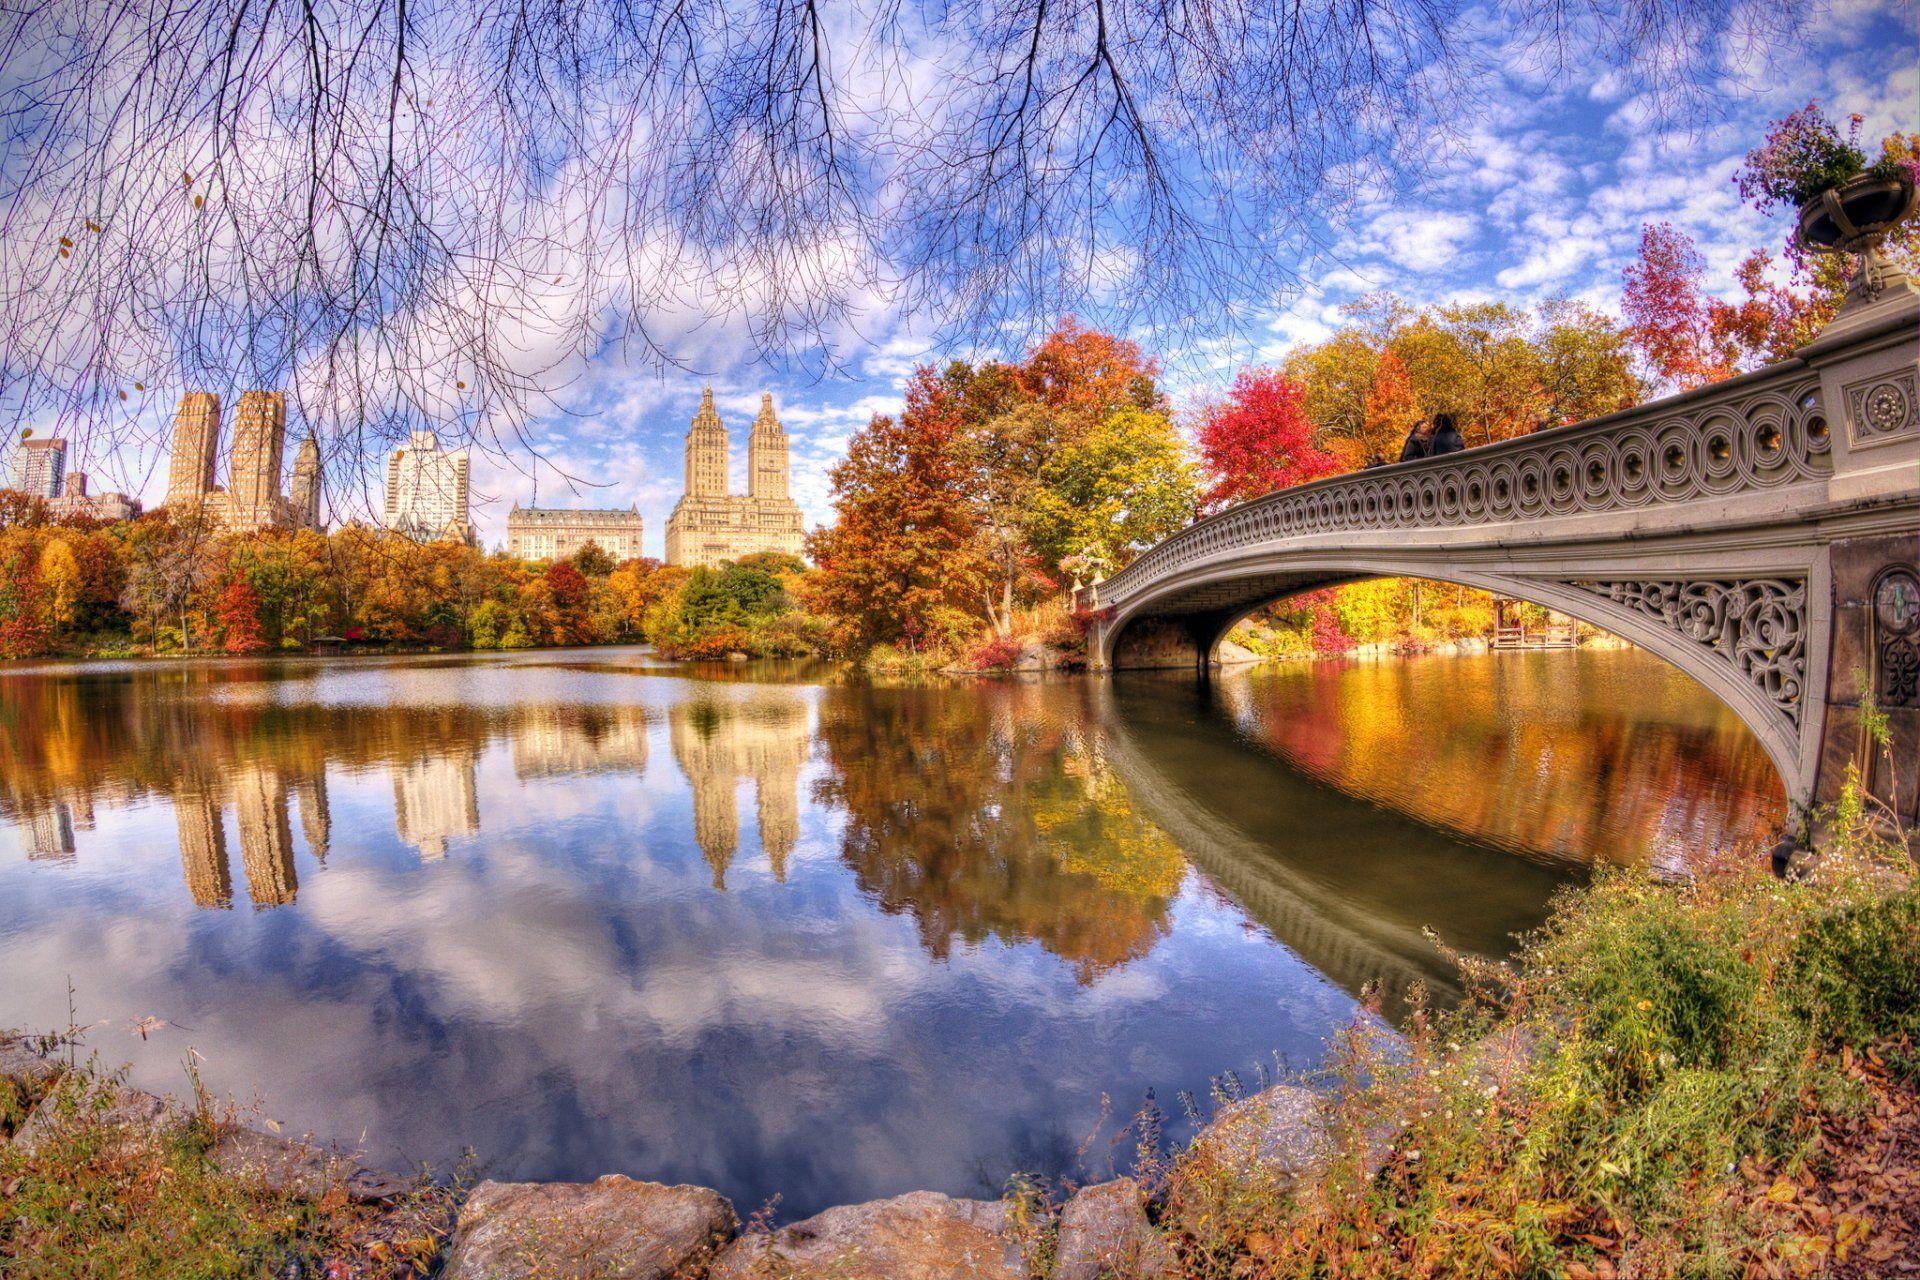 Man Made Central Park Reflection Pond Bridge Tree Fall Foliage New